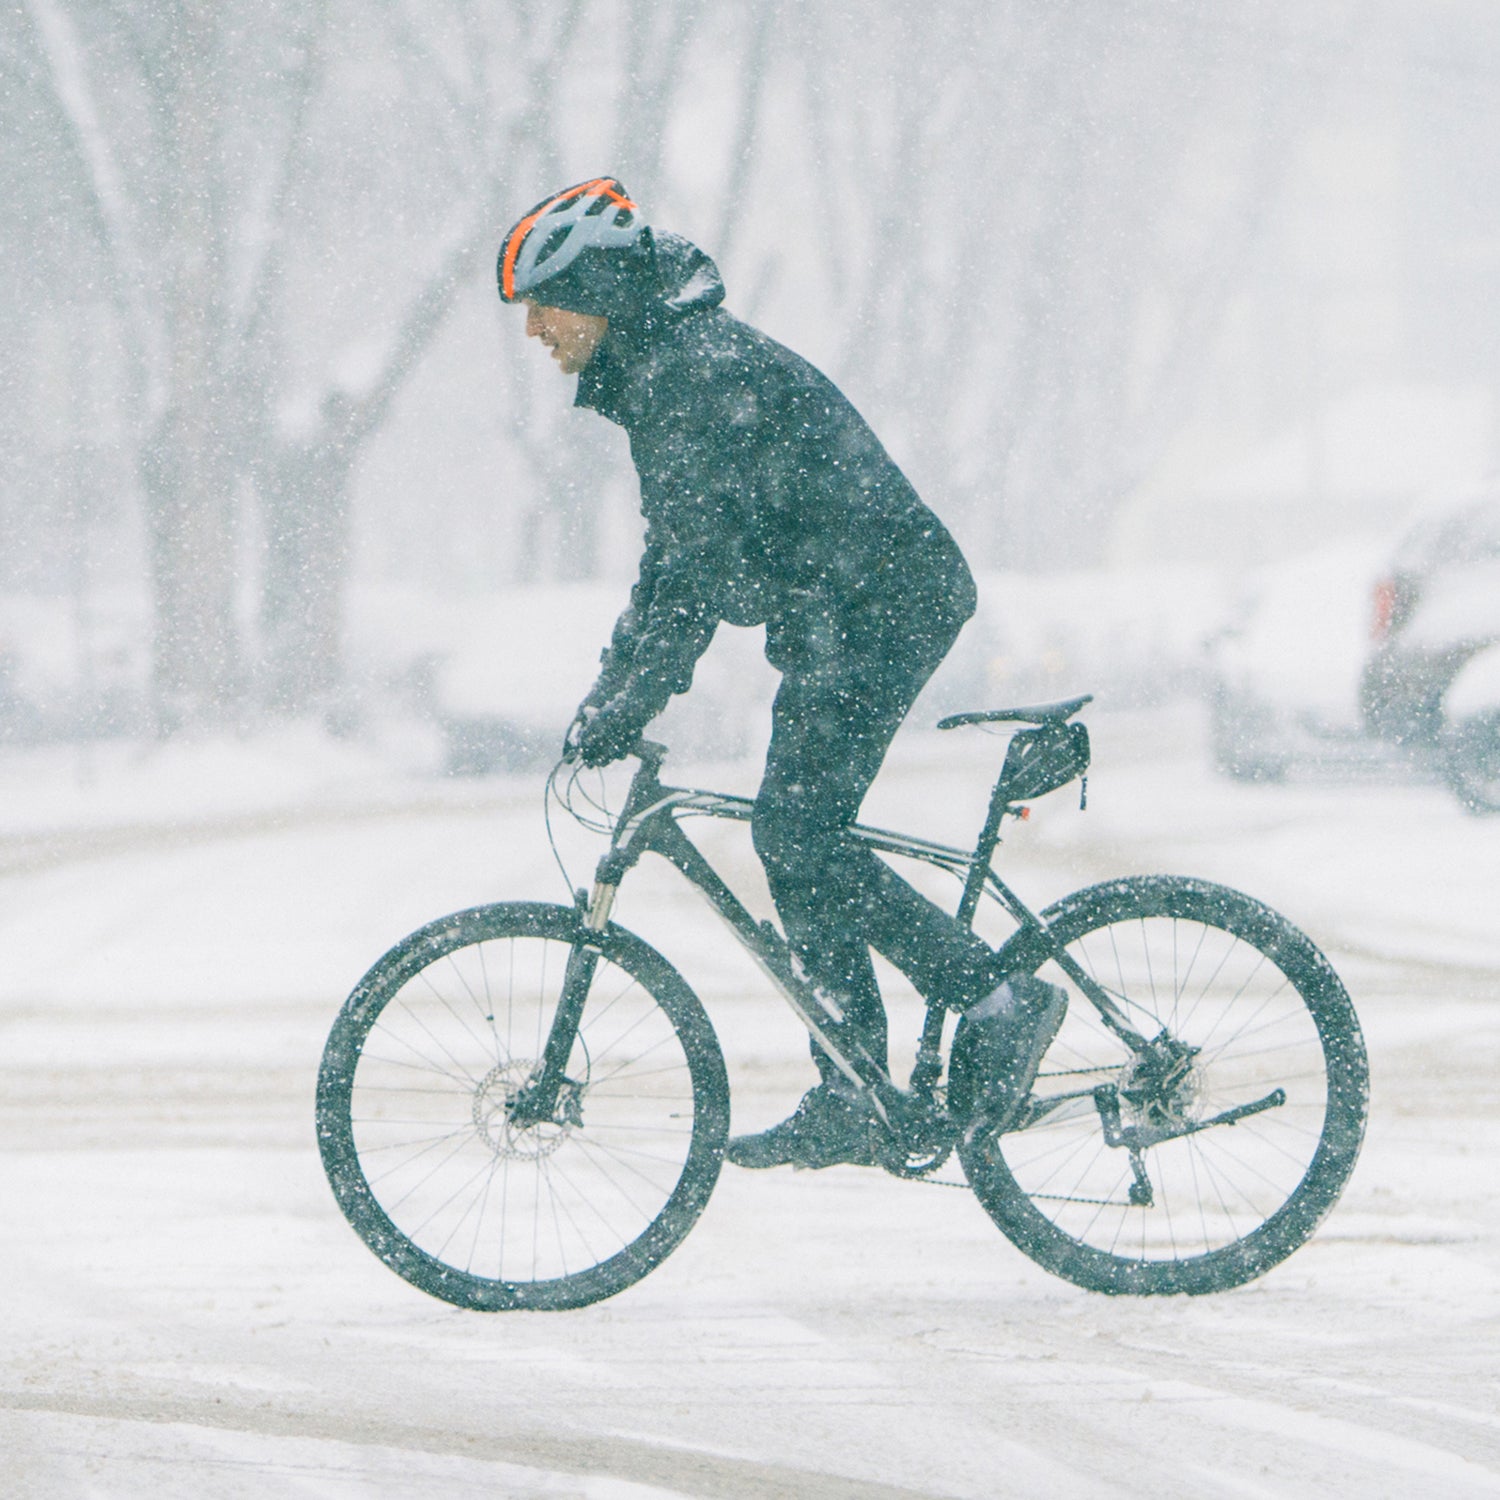 Gear to Keep You Bike Commuting All Winter Long